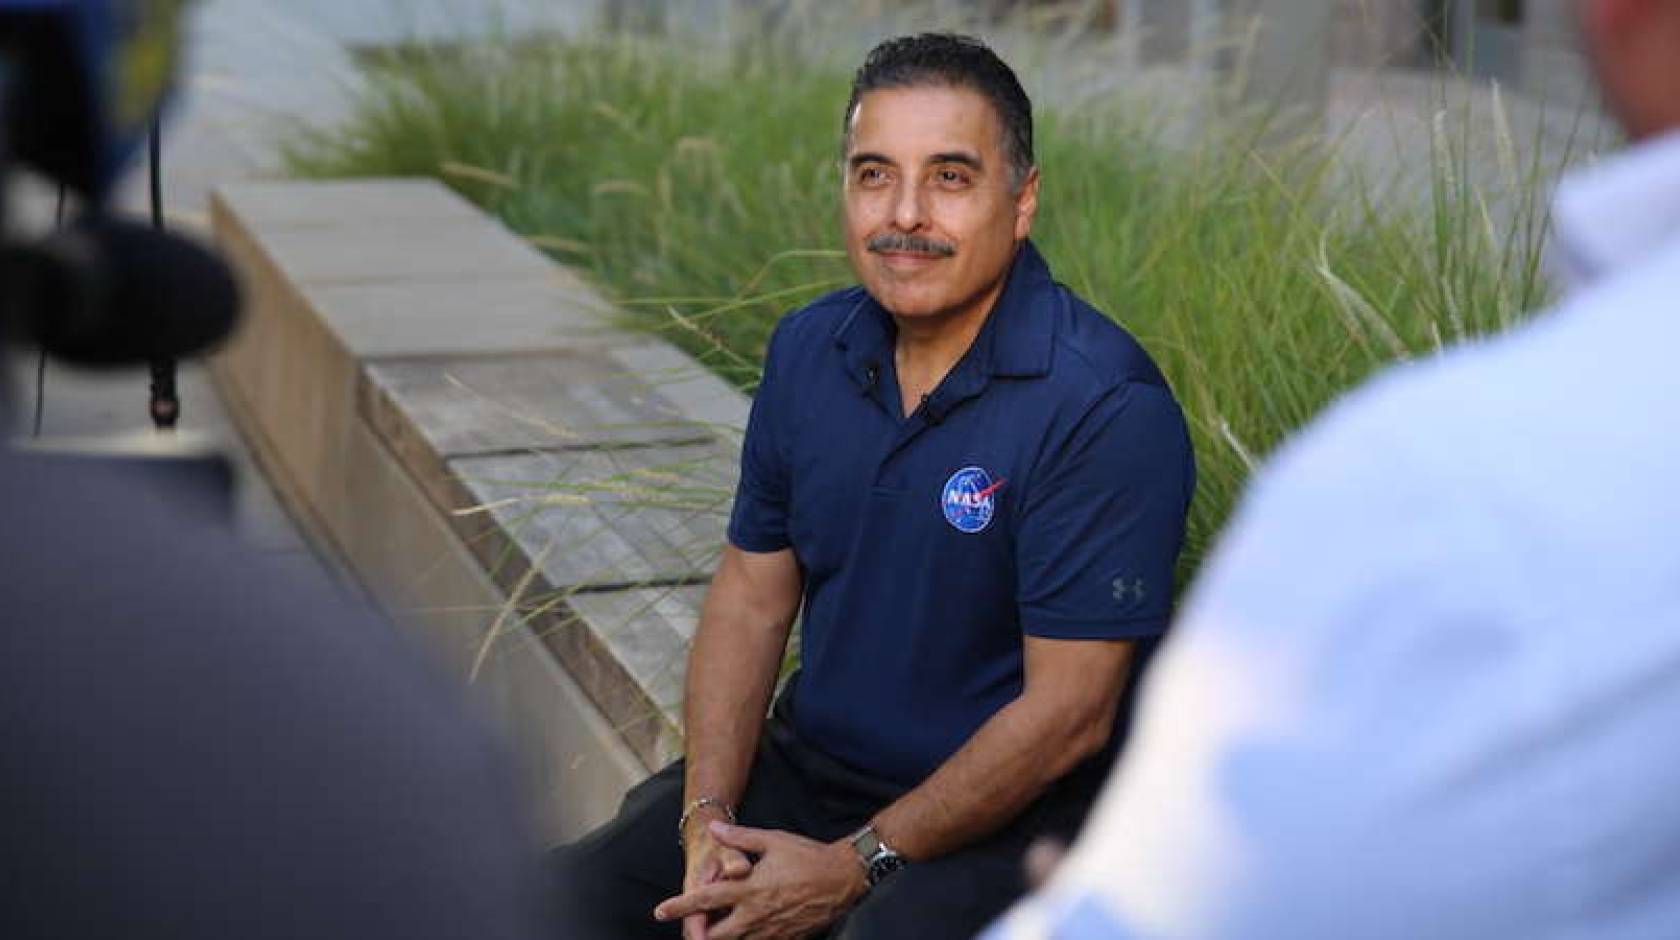 José Hernández sitting outside in a NASA polo